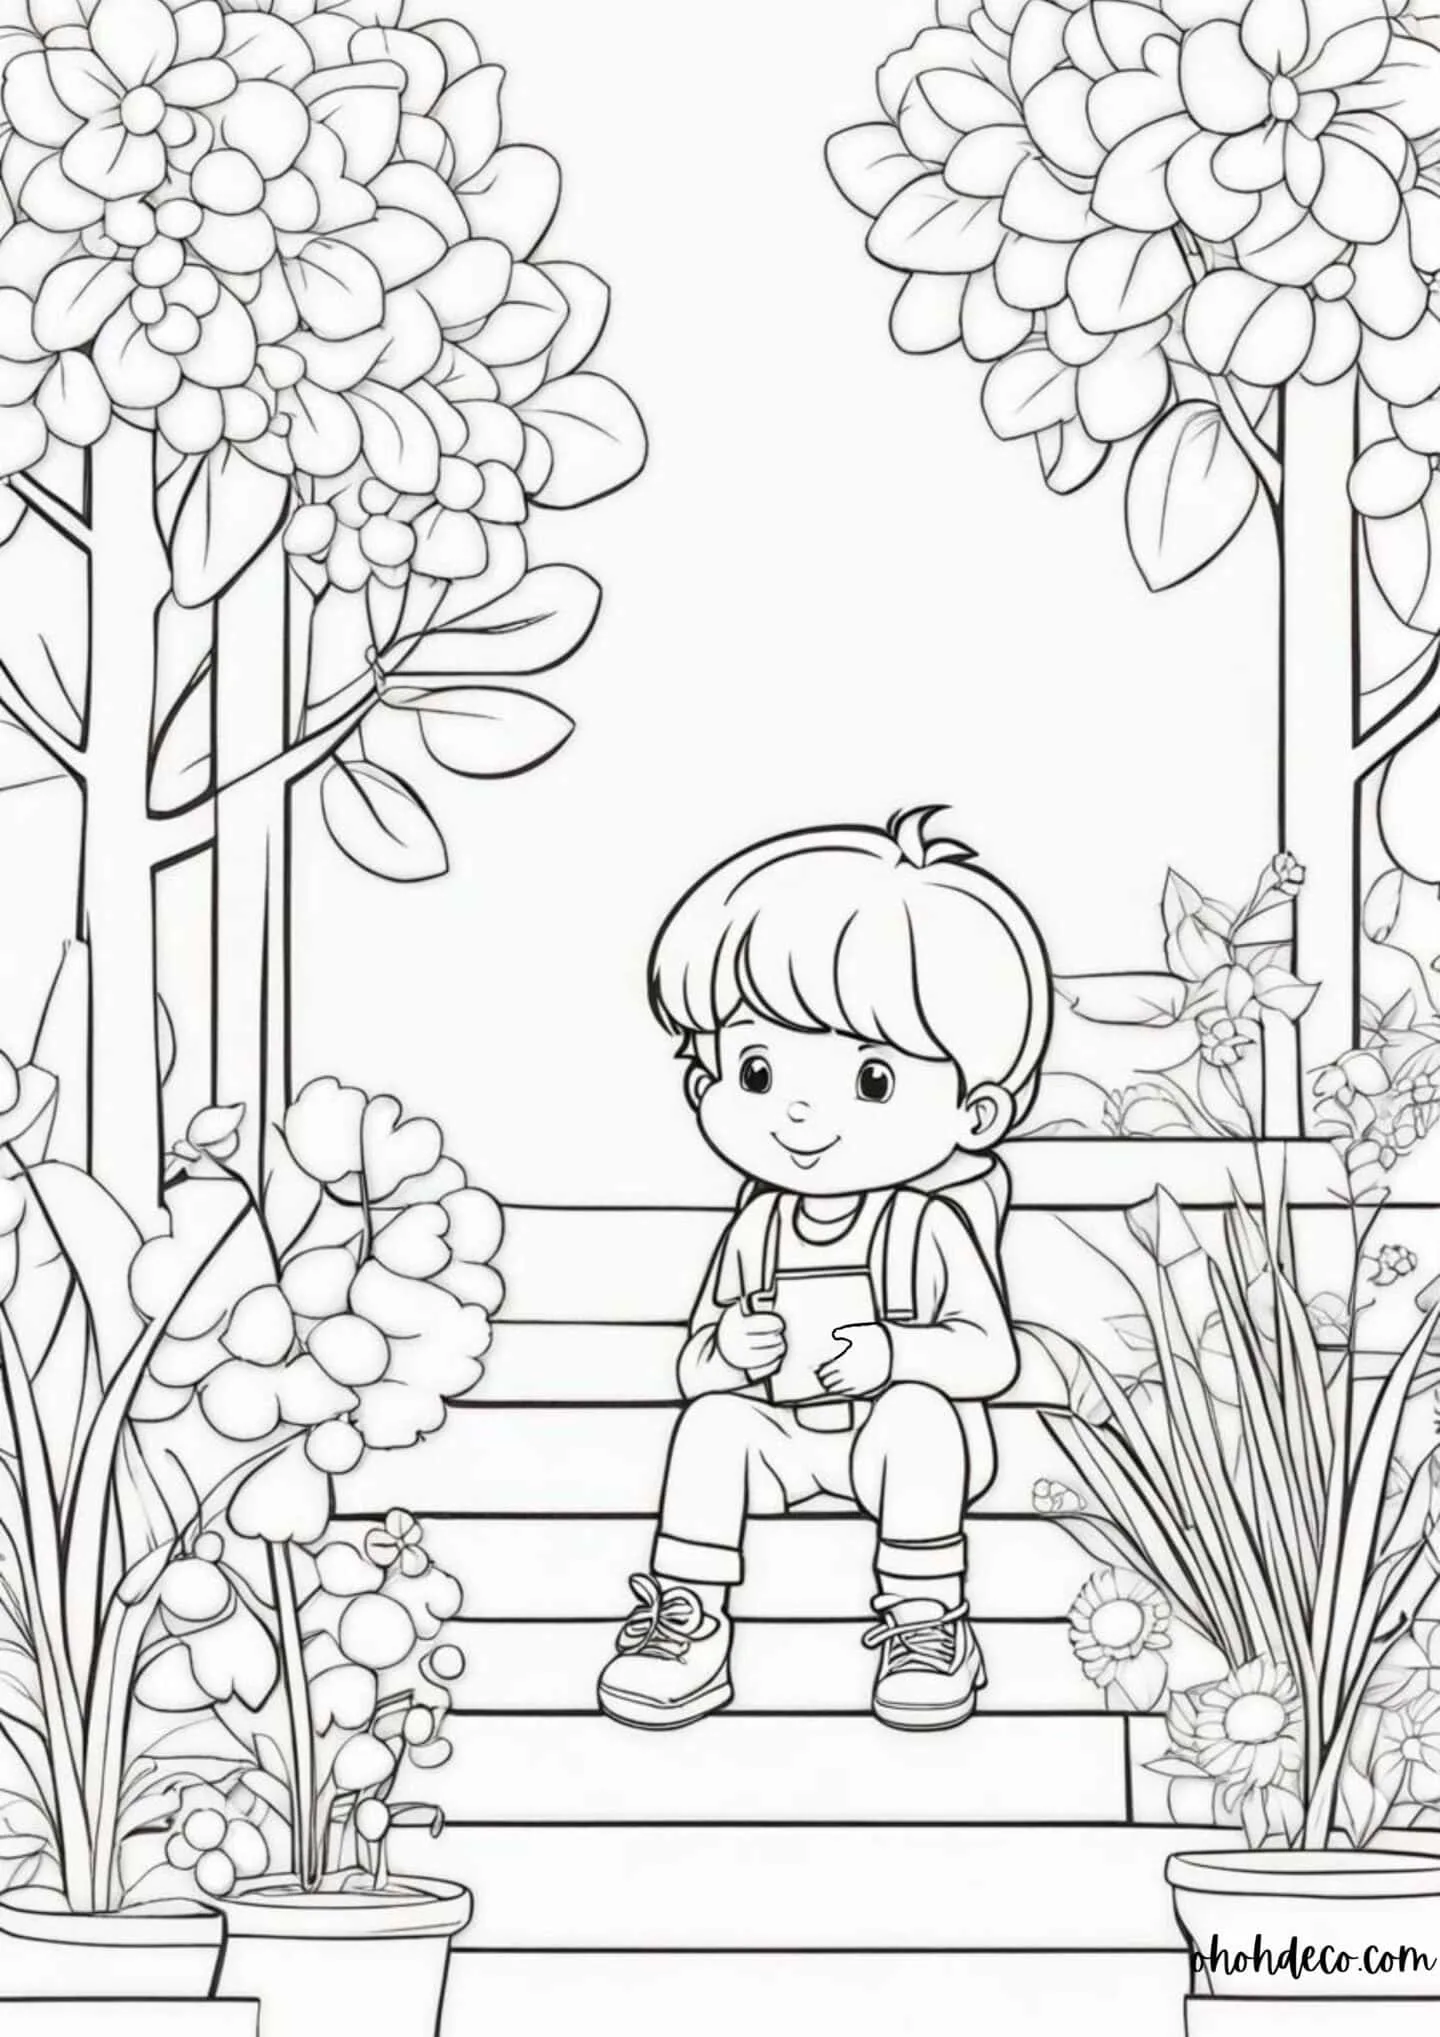 coloring page kid garden